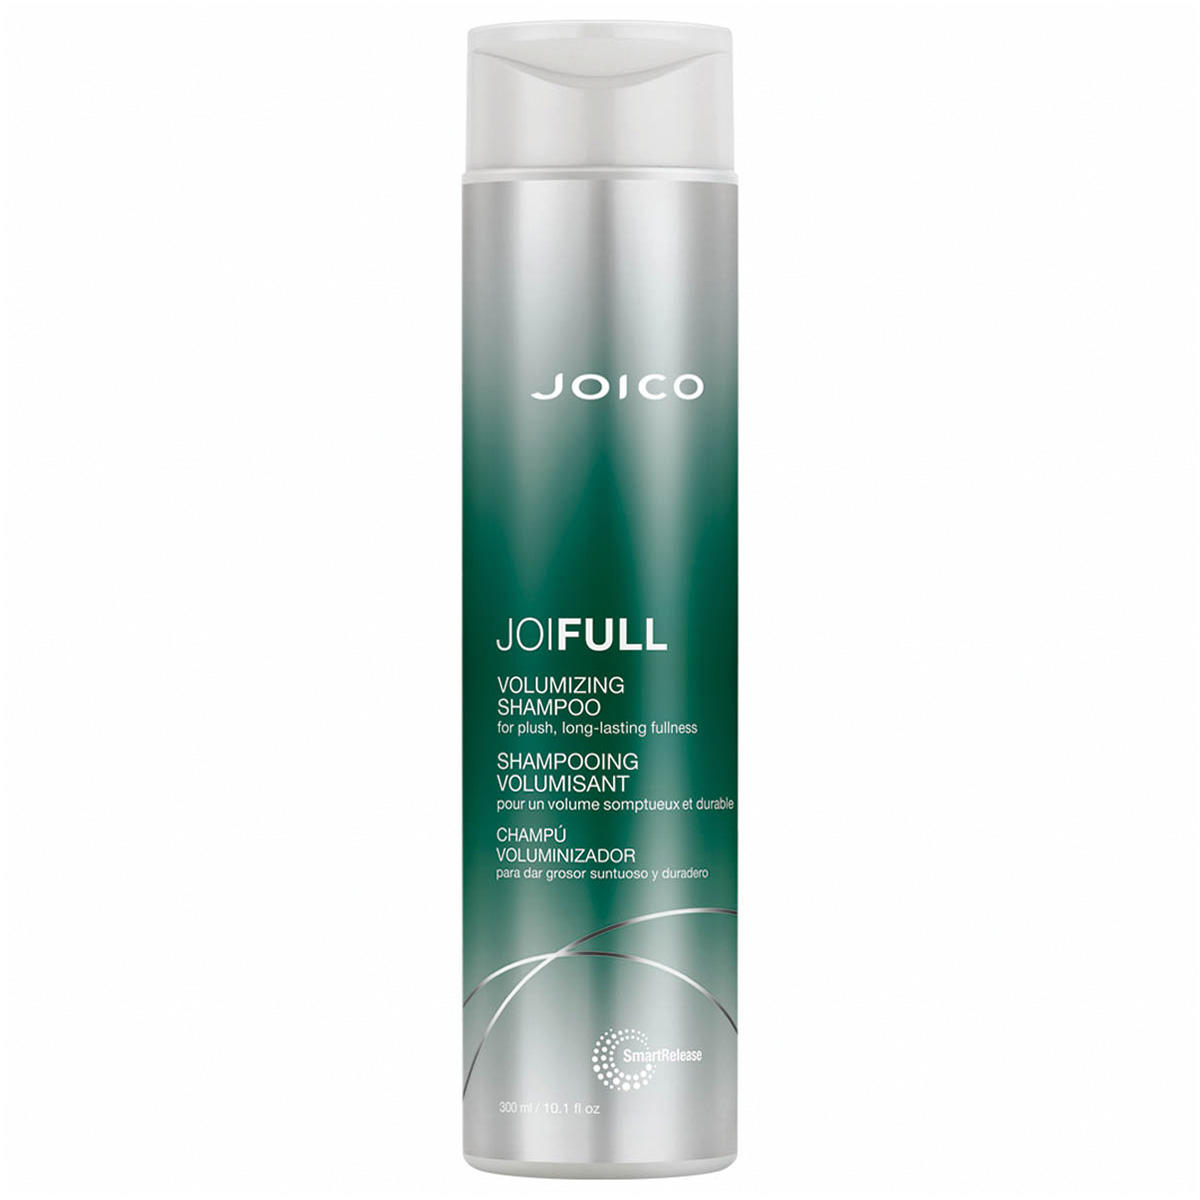 JOICO JOIFULL JOICO JOIFULL Volumizing Shampoo  - 1